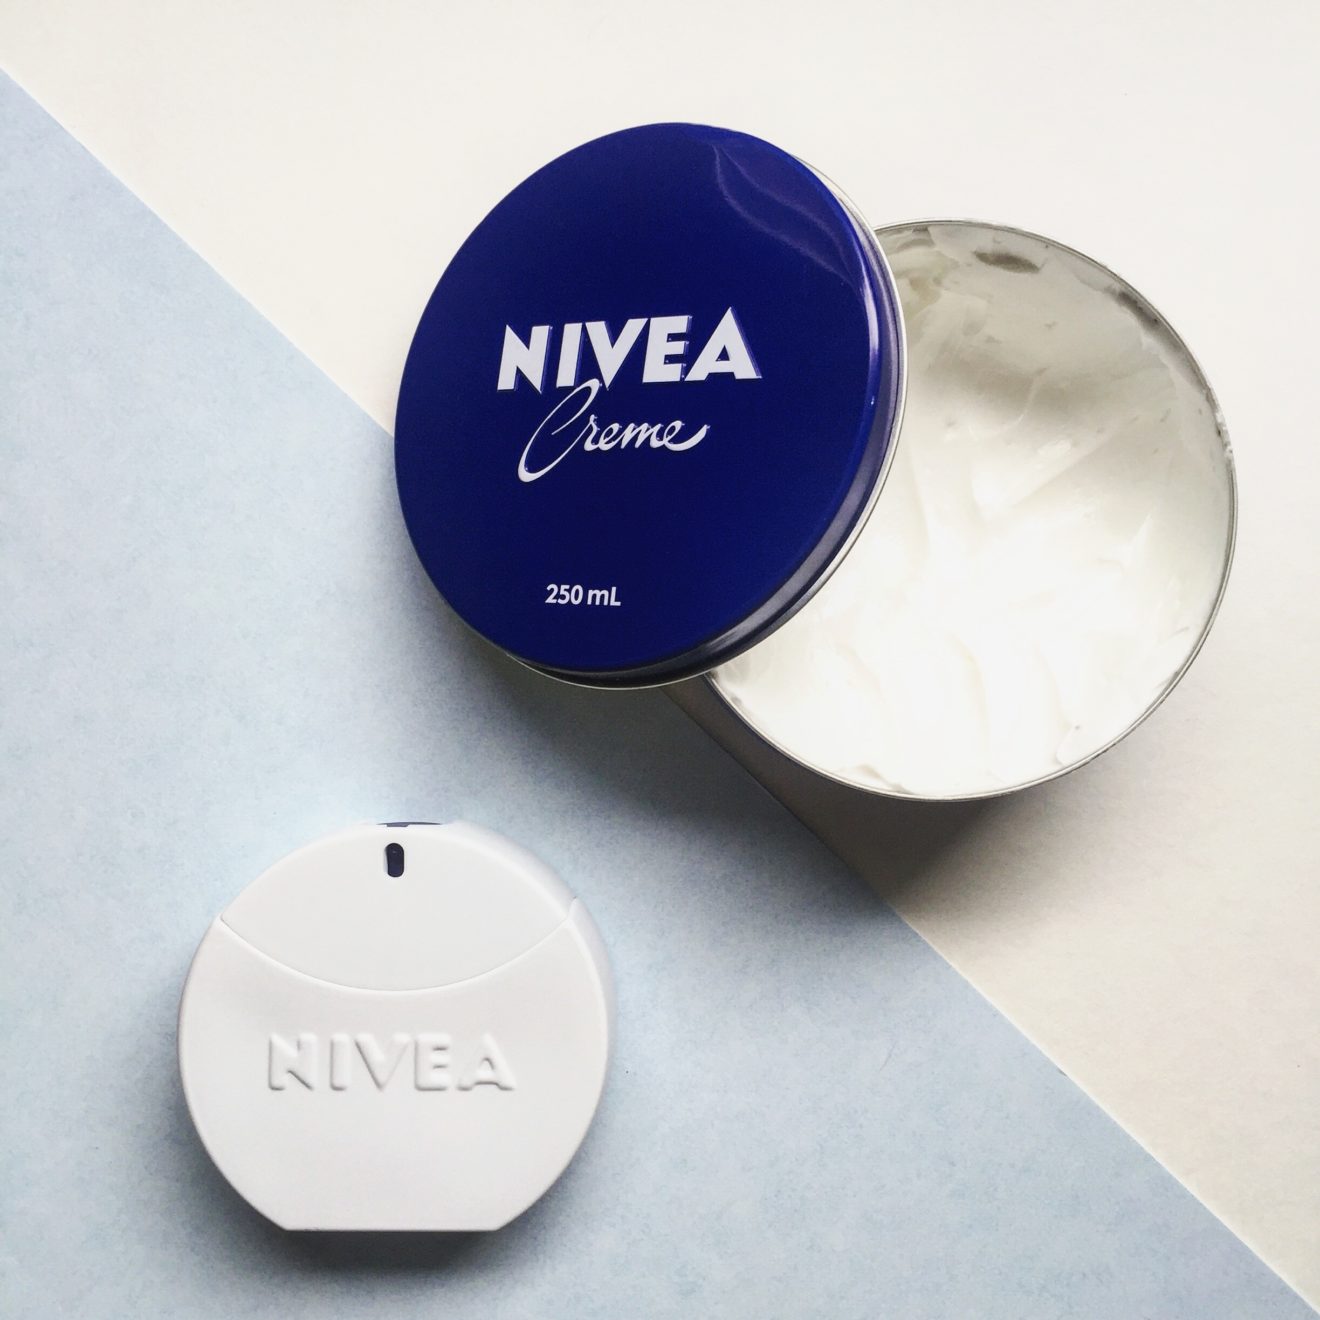 NIVEA Creme Perfume